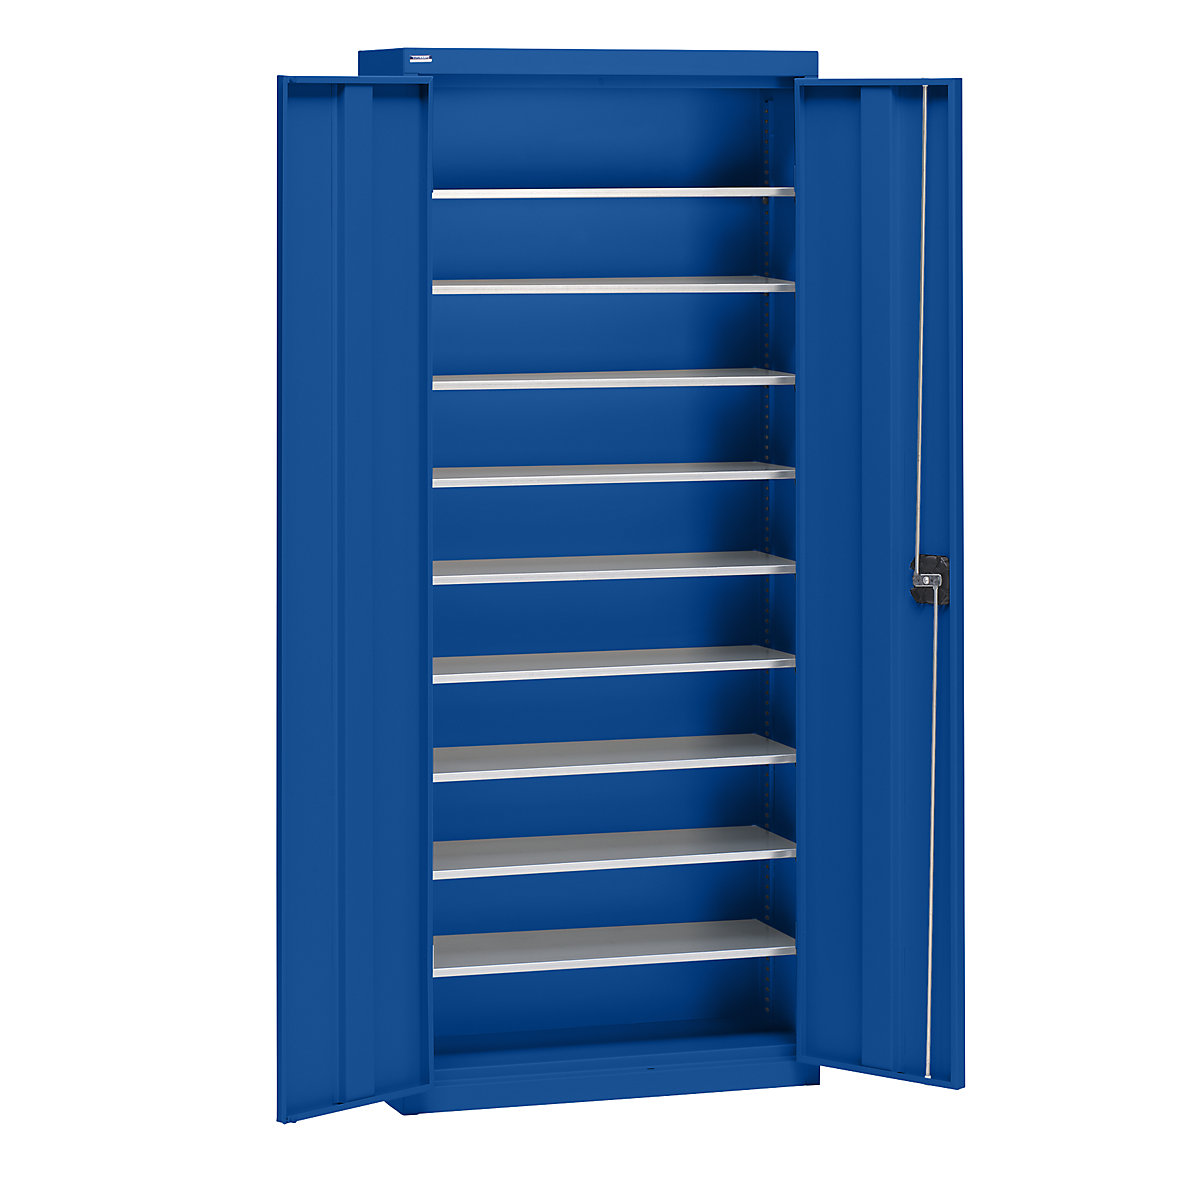 Storage cupboard made of sheet steel – eurokraft pro, height 1575 mm, gentian blue RAL 5010, 9 shelves-12